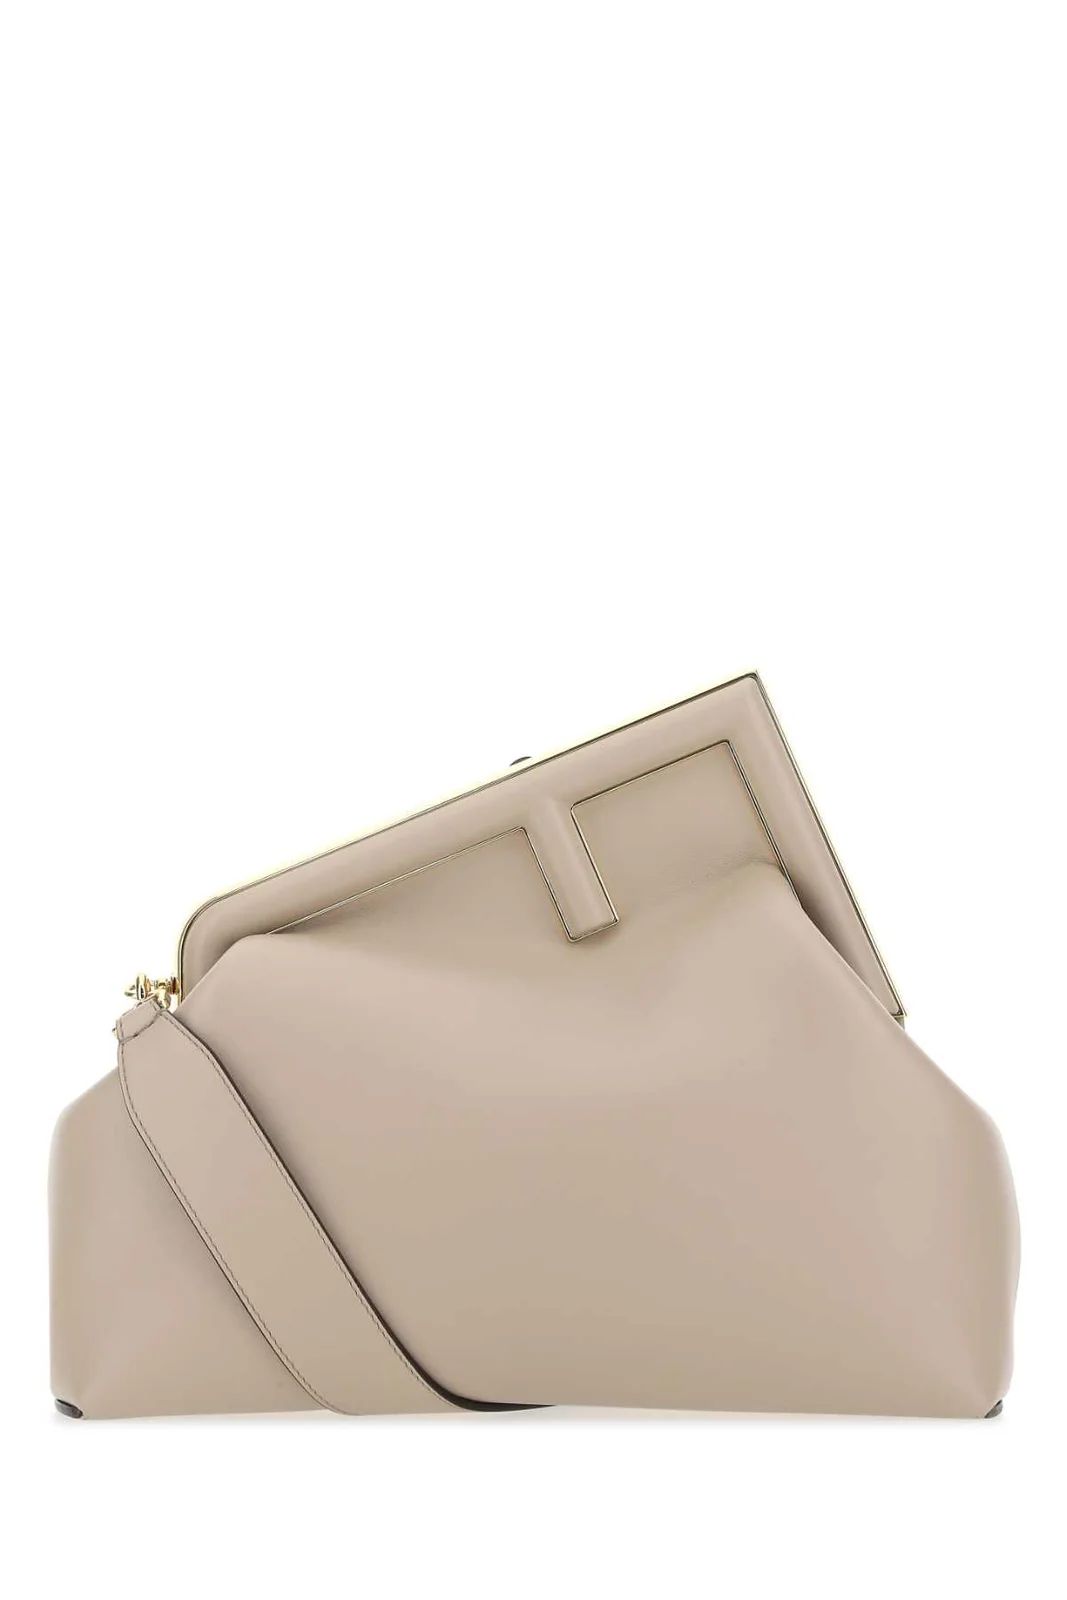 Fendi First Medium Shoulder Bag | Cettire Global